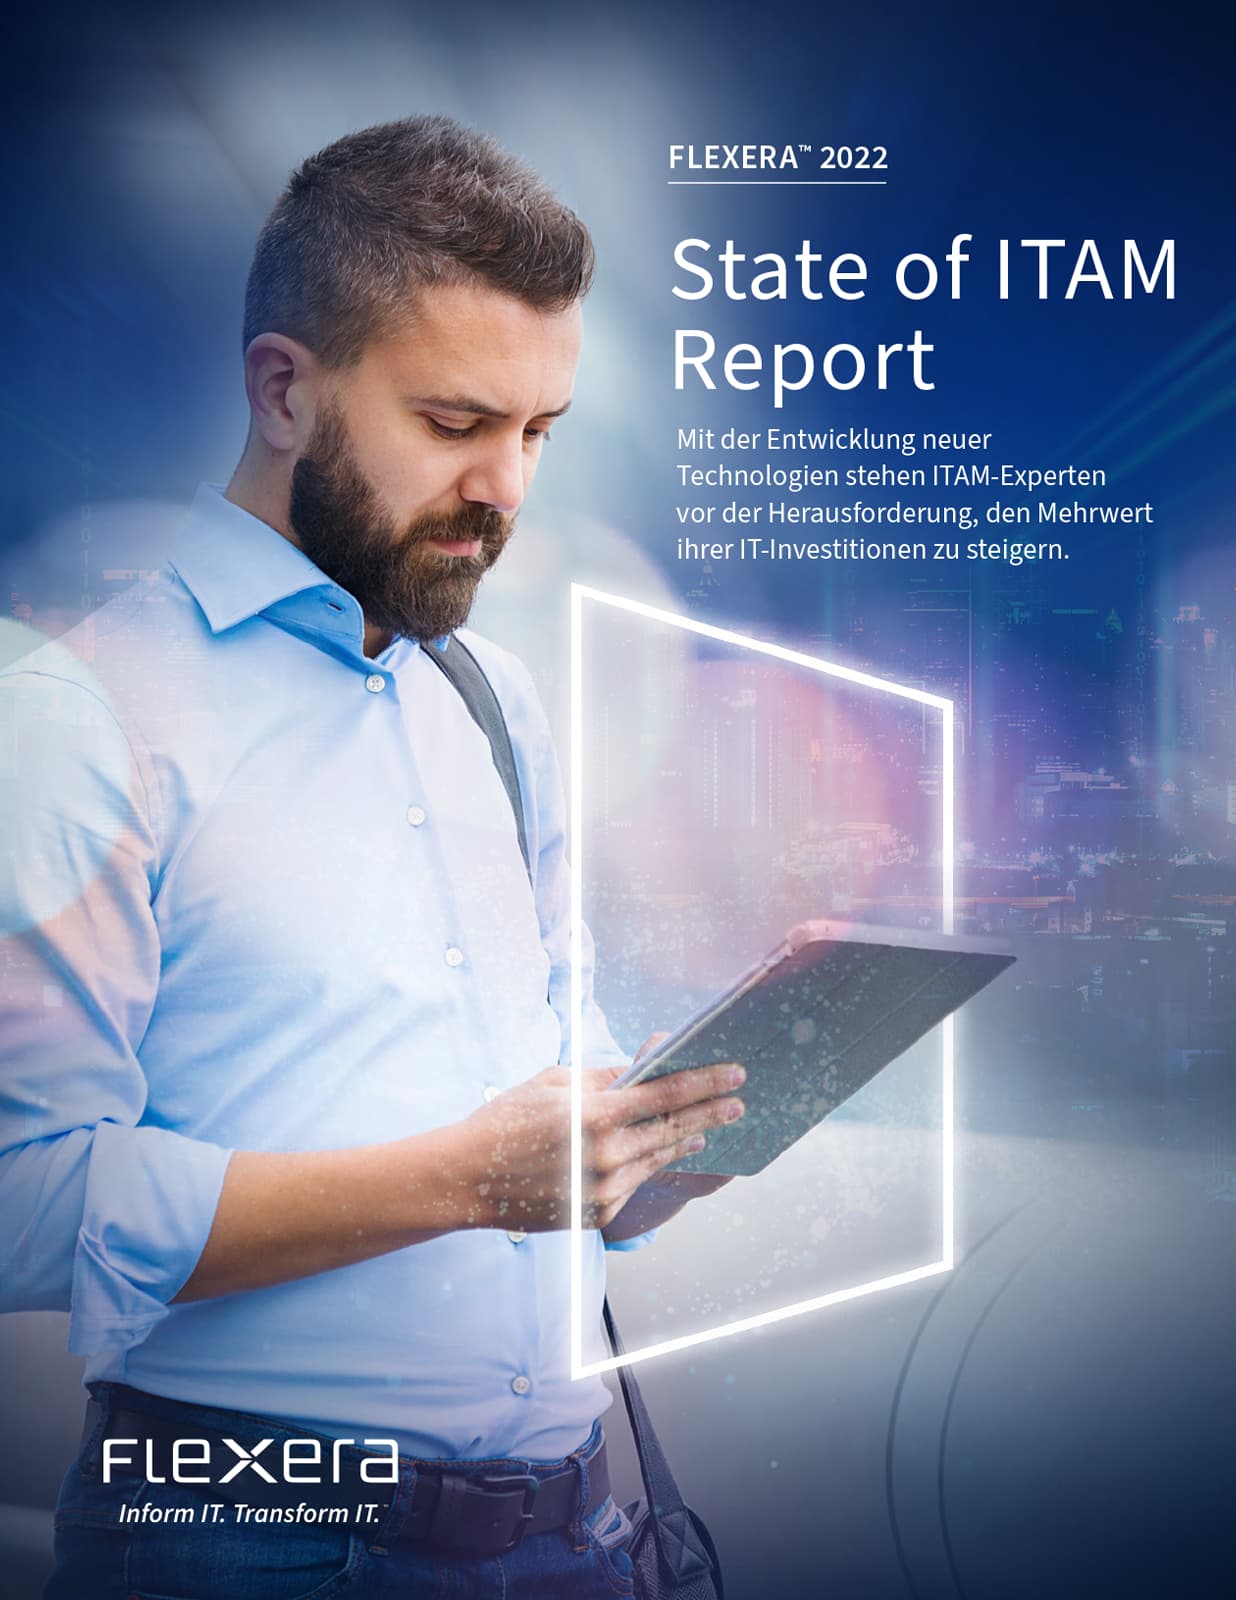 State of ITAM Report 2022 von Flexera